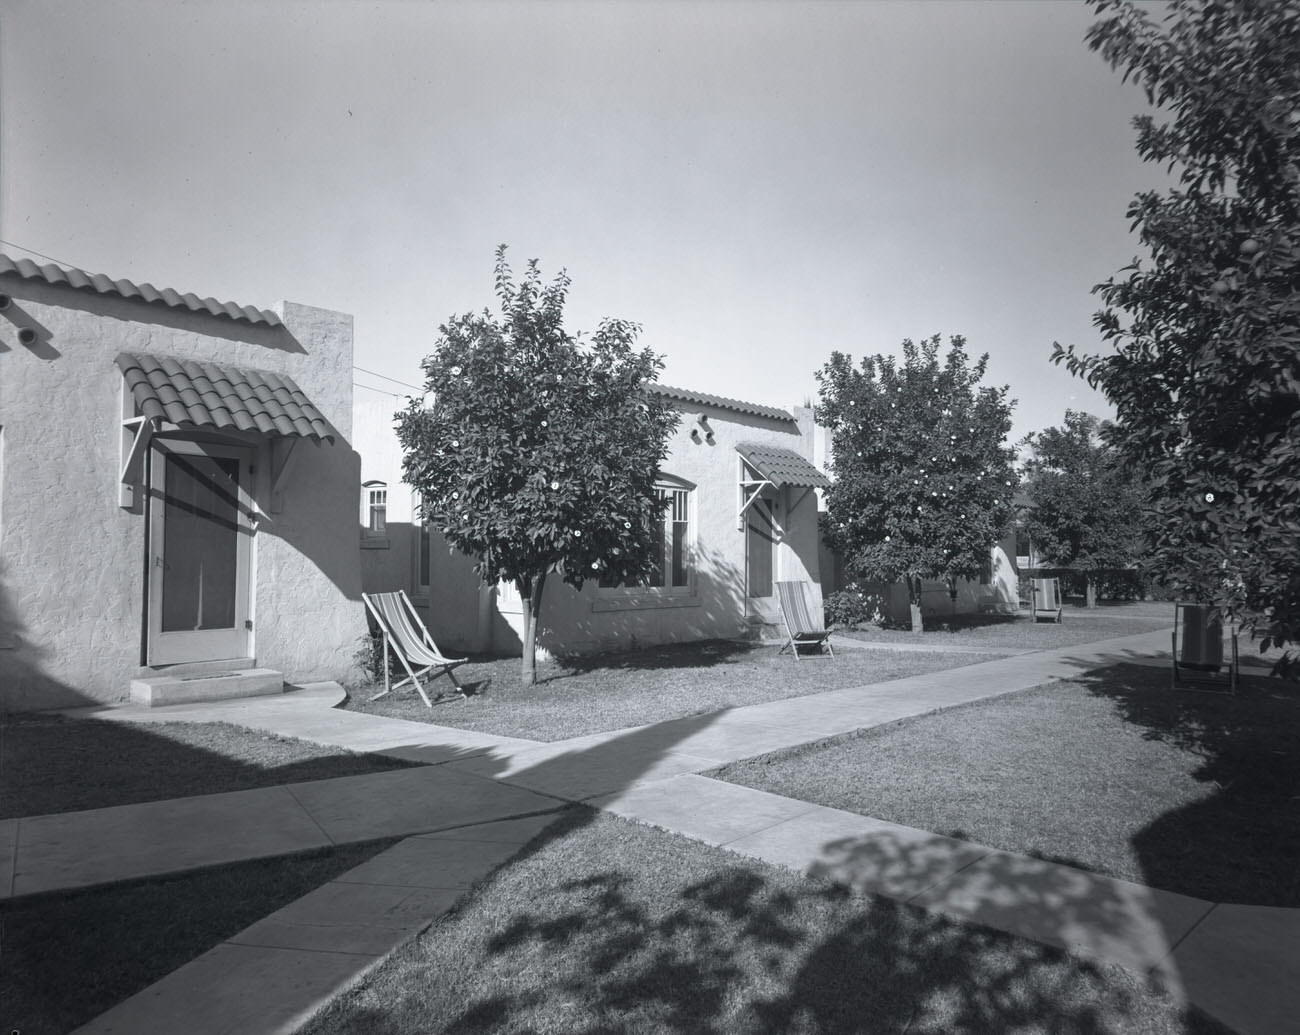 Andrew C. James Home, 1942